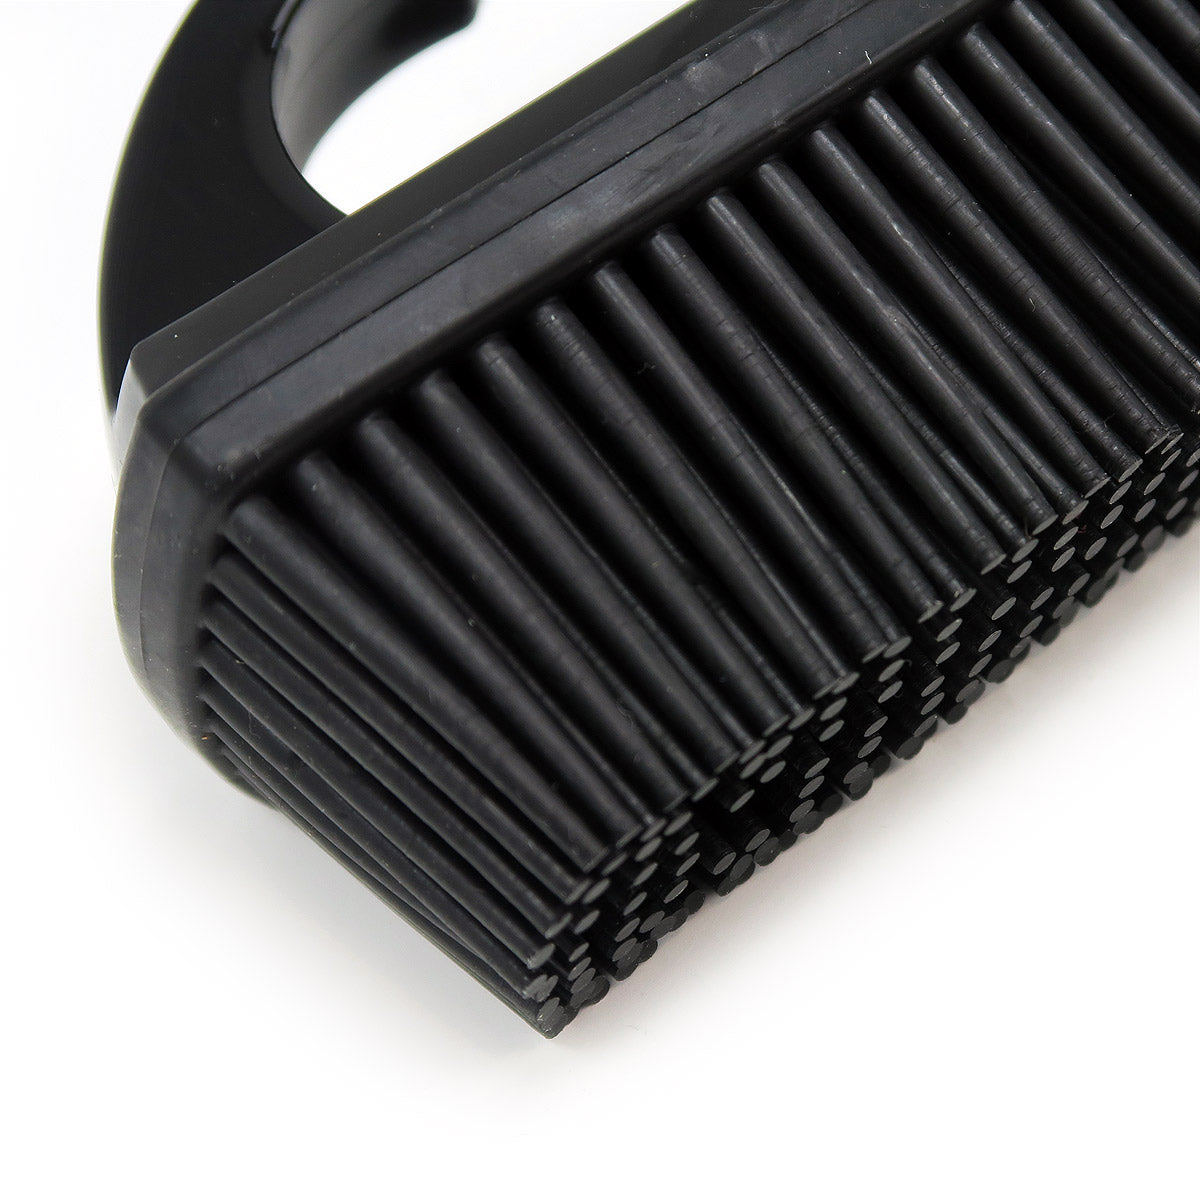 Car pet hair brush - close-up